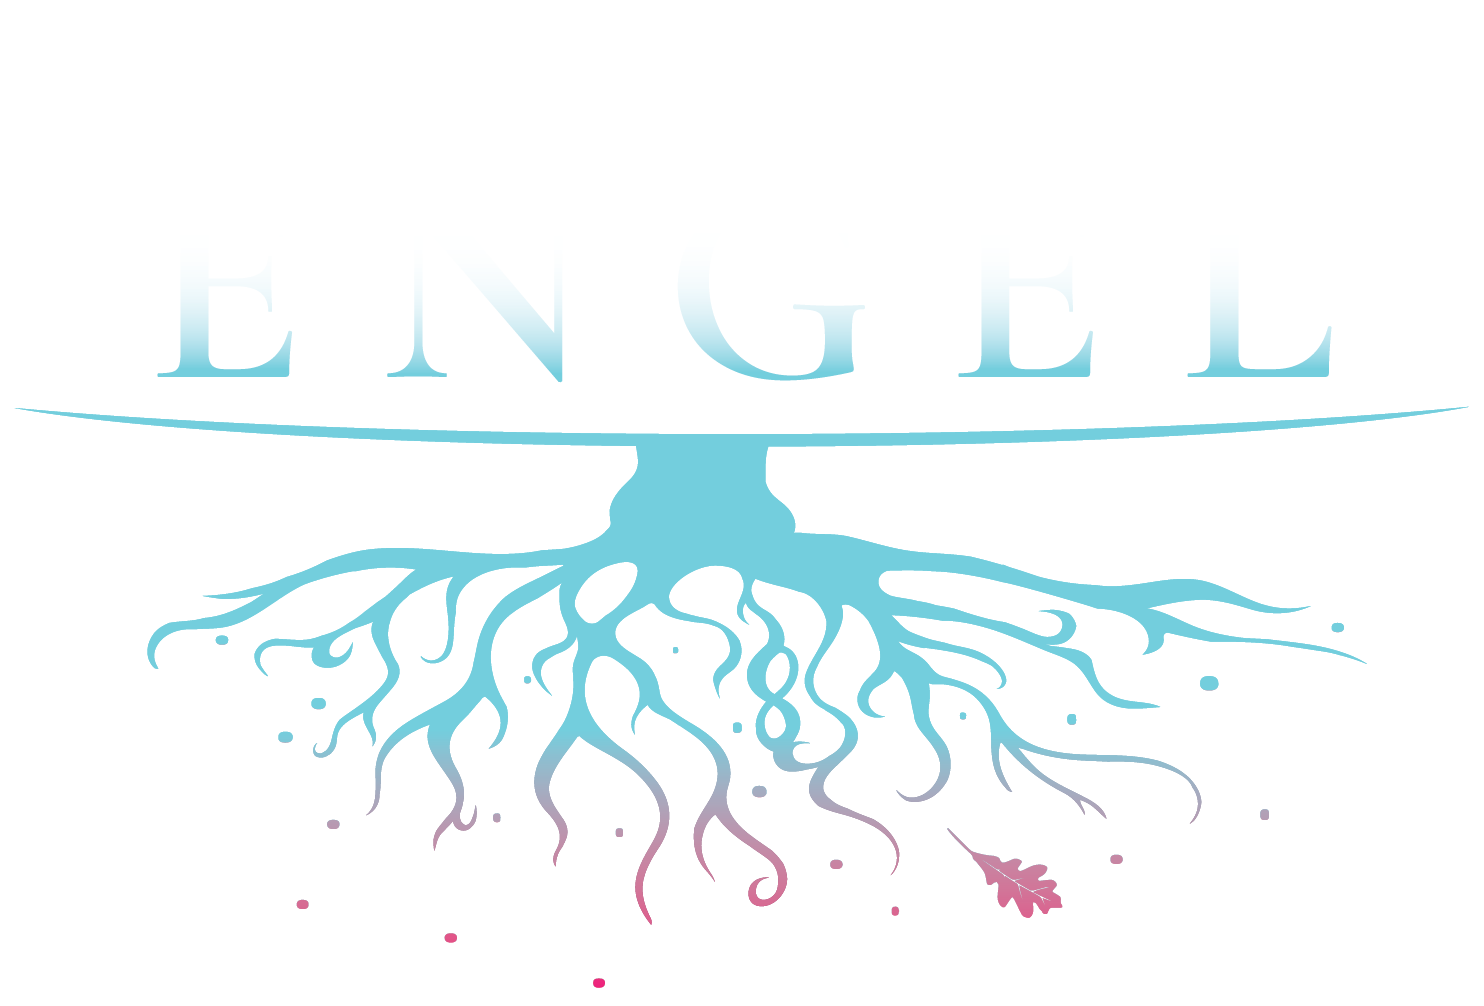 Laura L. Engel